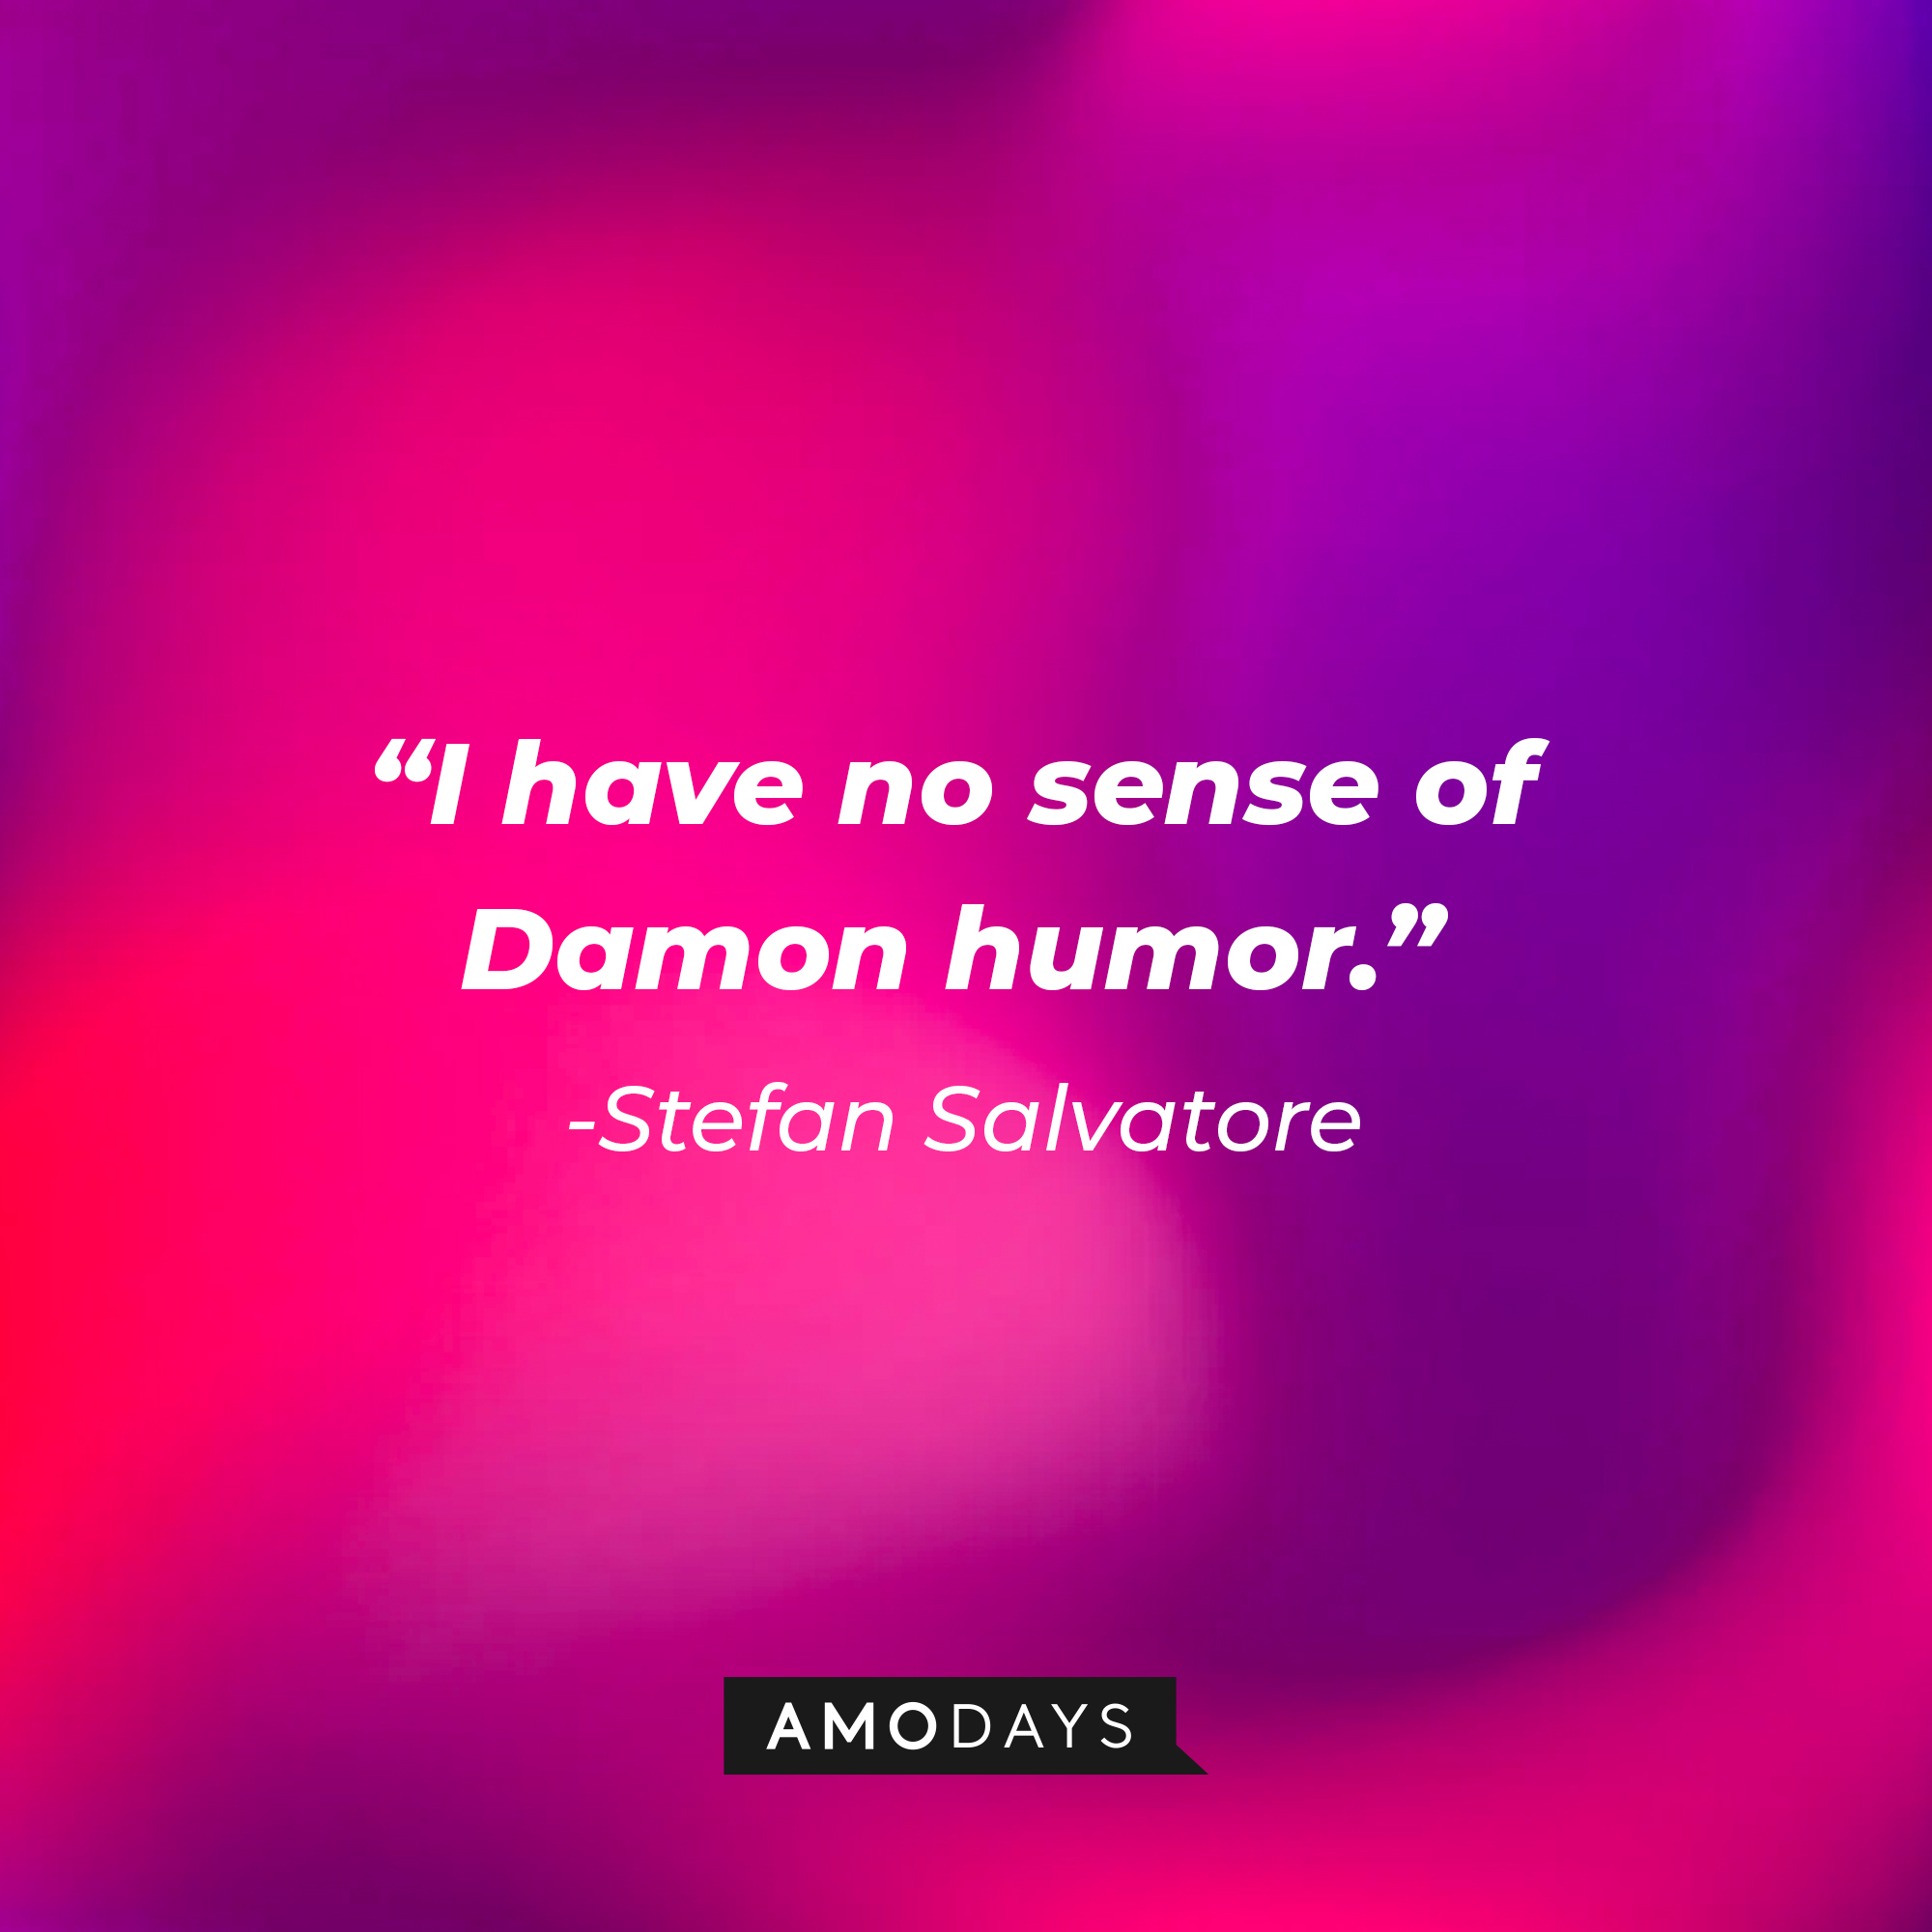 Stefan Salvatore's quote: "I have no sense of Damon humor." | Source: AmoDays